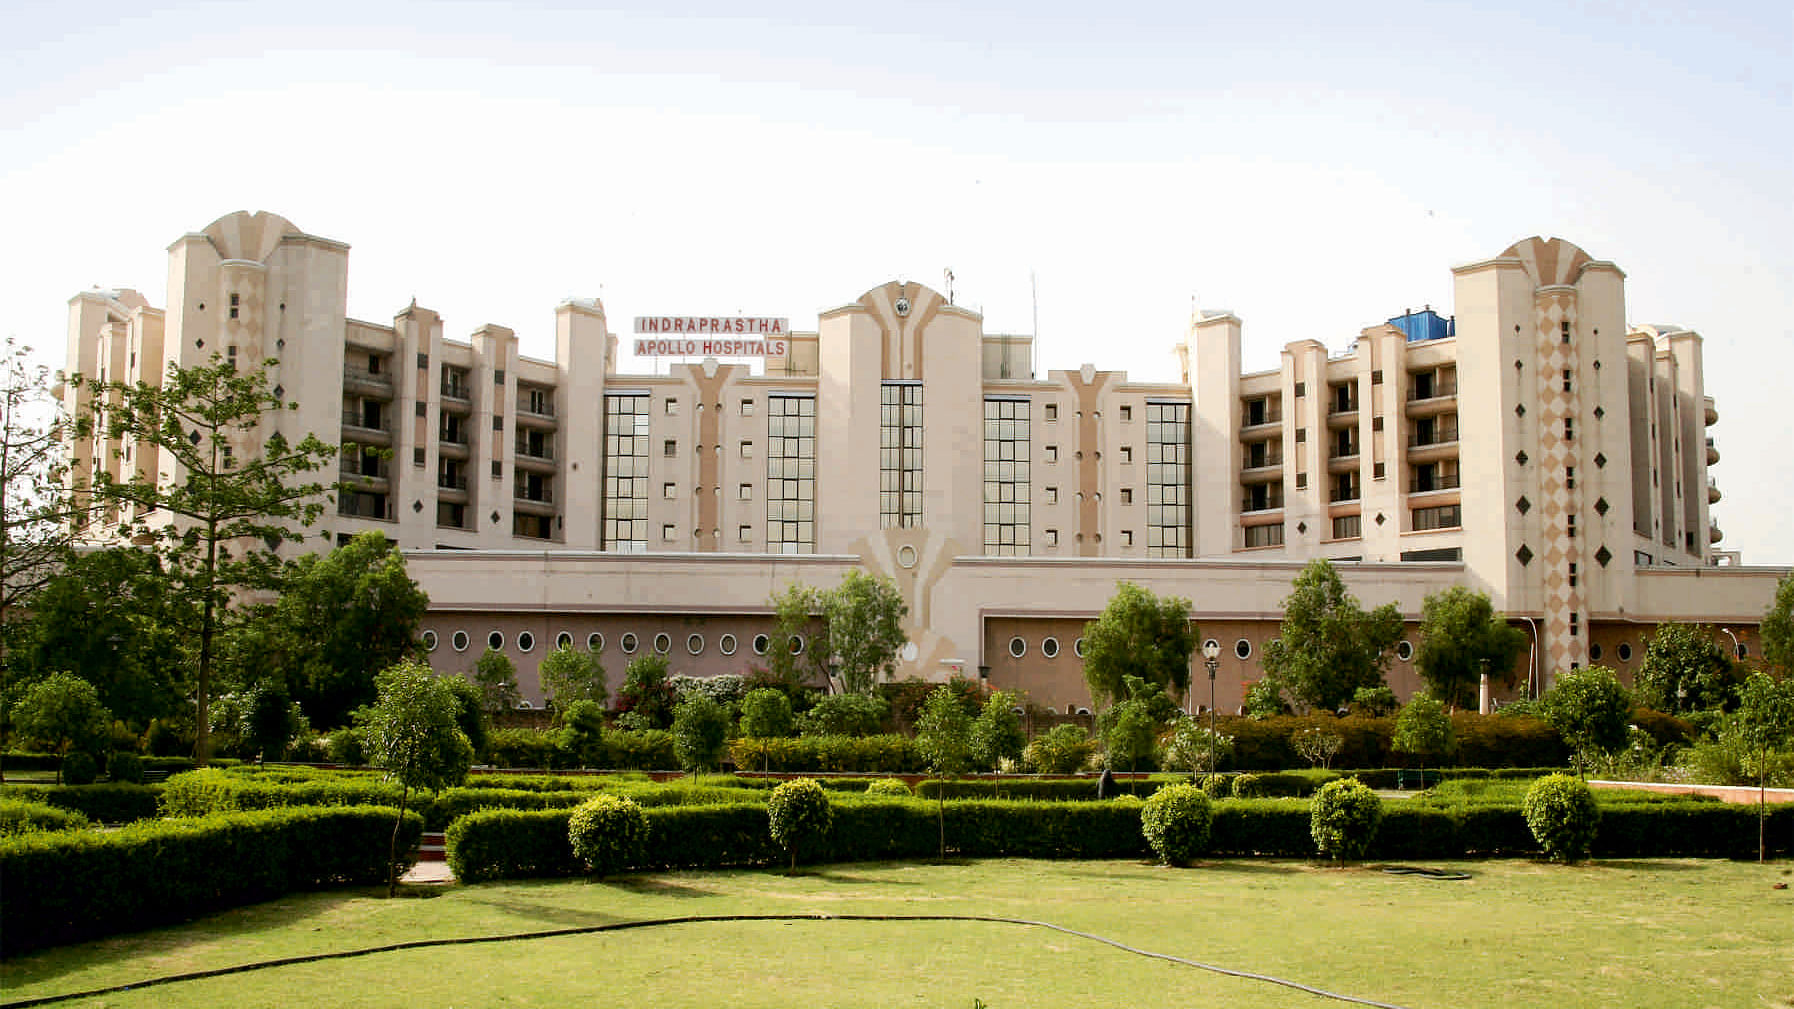 Indraprastha Apollo Hospital, New Delhi. (Photo Courtesy: <a href="https://www.practo.com/delhi/doctor/dr-deepal-govil-surgeon">practo.com</a>)